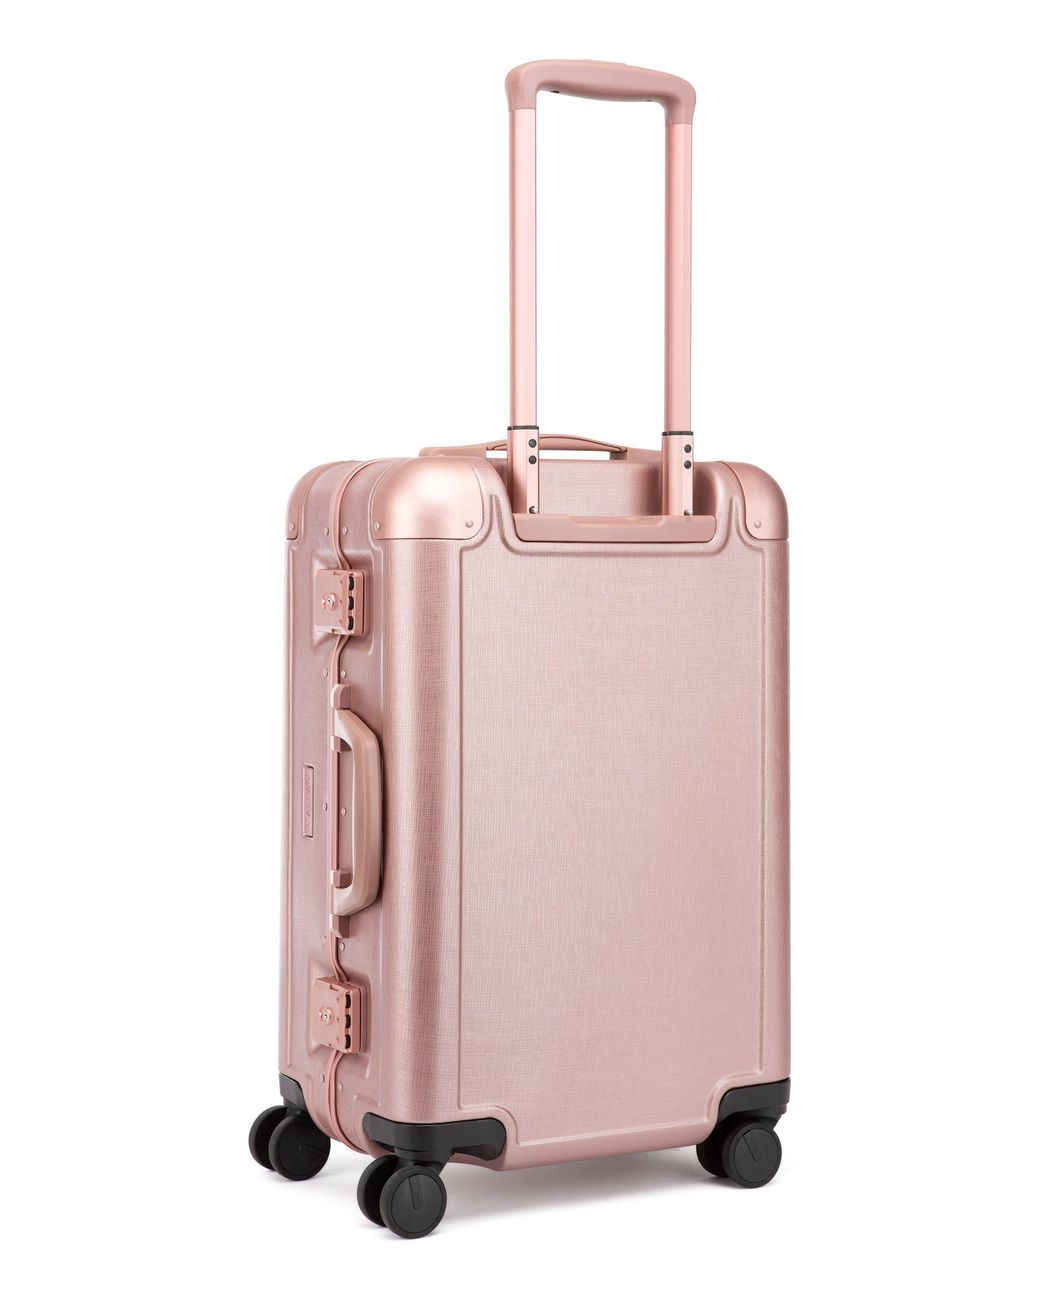 CALPAK X Jen Atkin 22-inch Carry-on Suitcase in Pink | Lyst